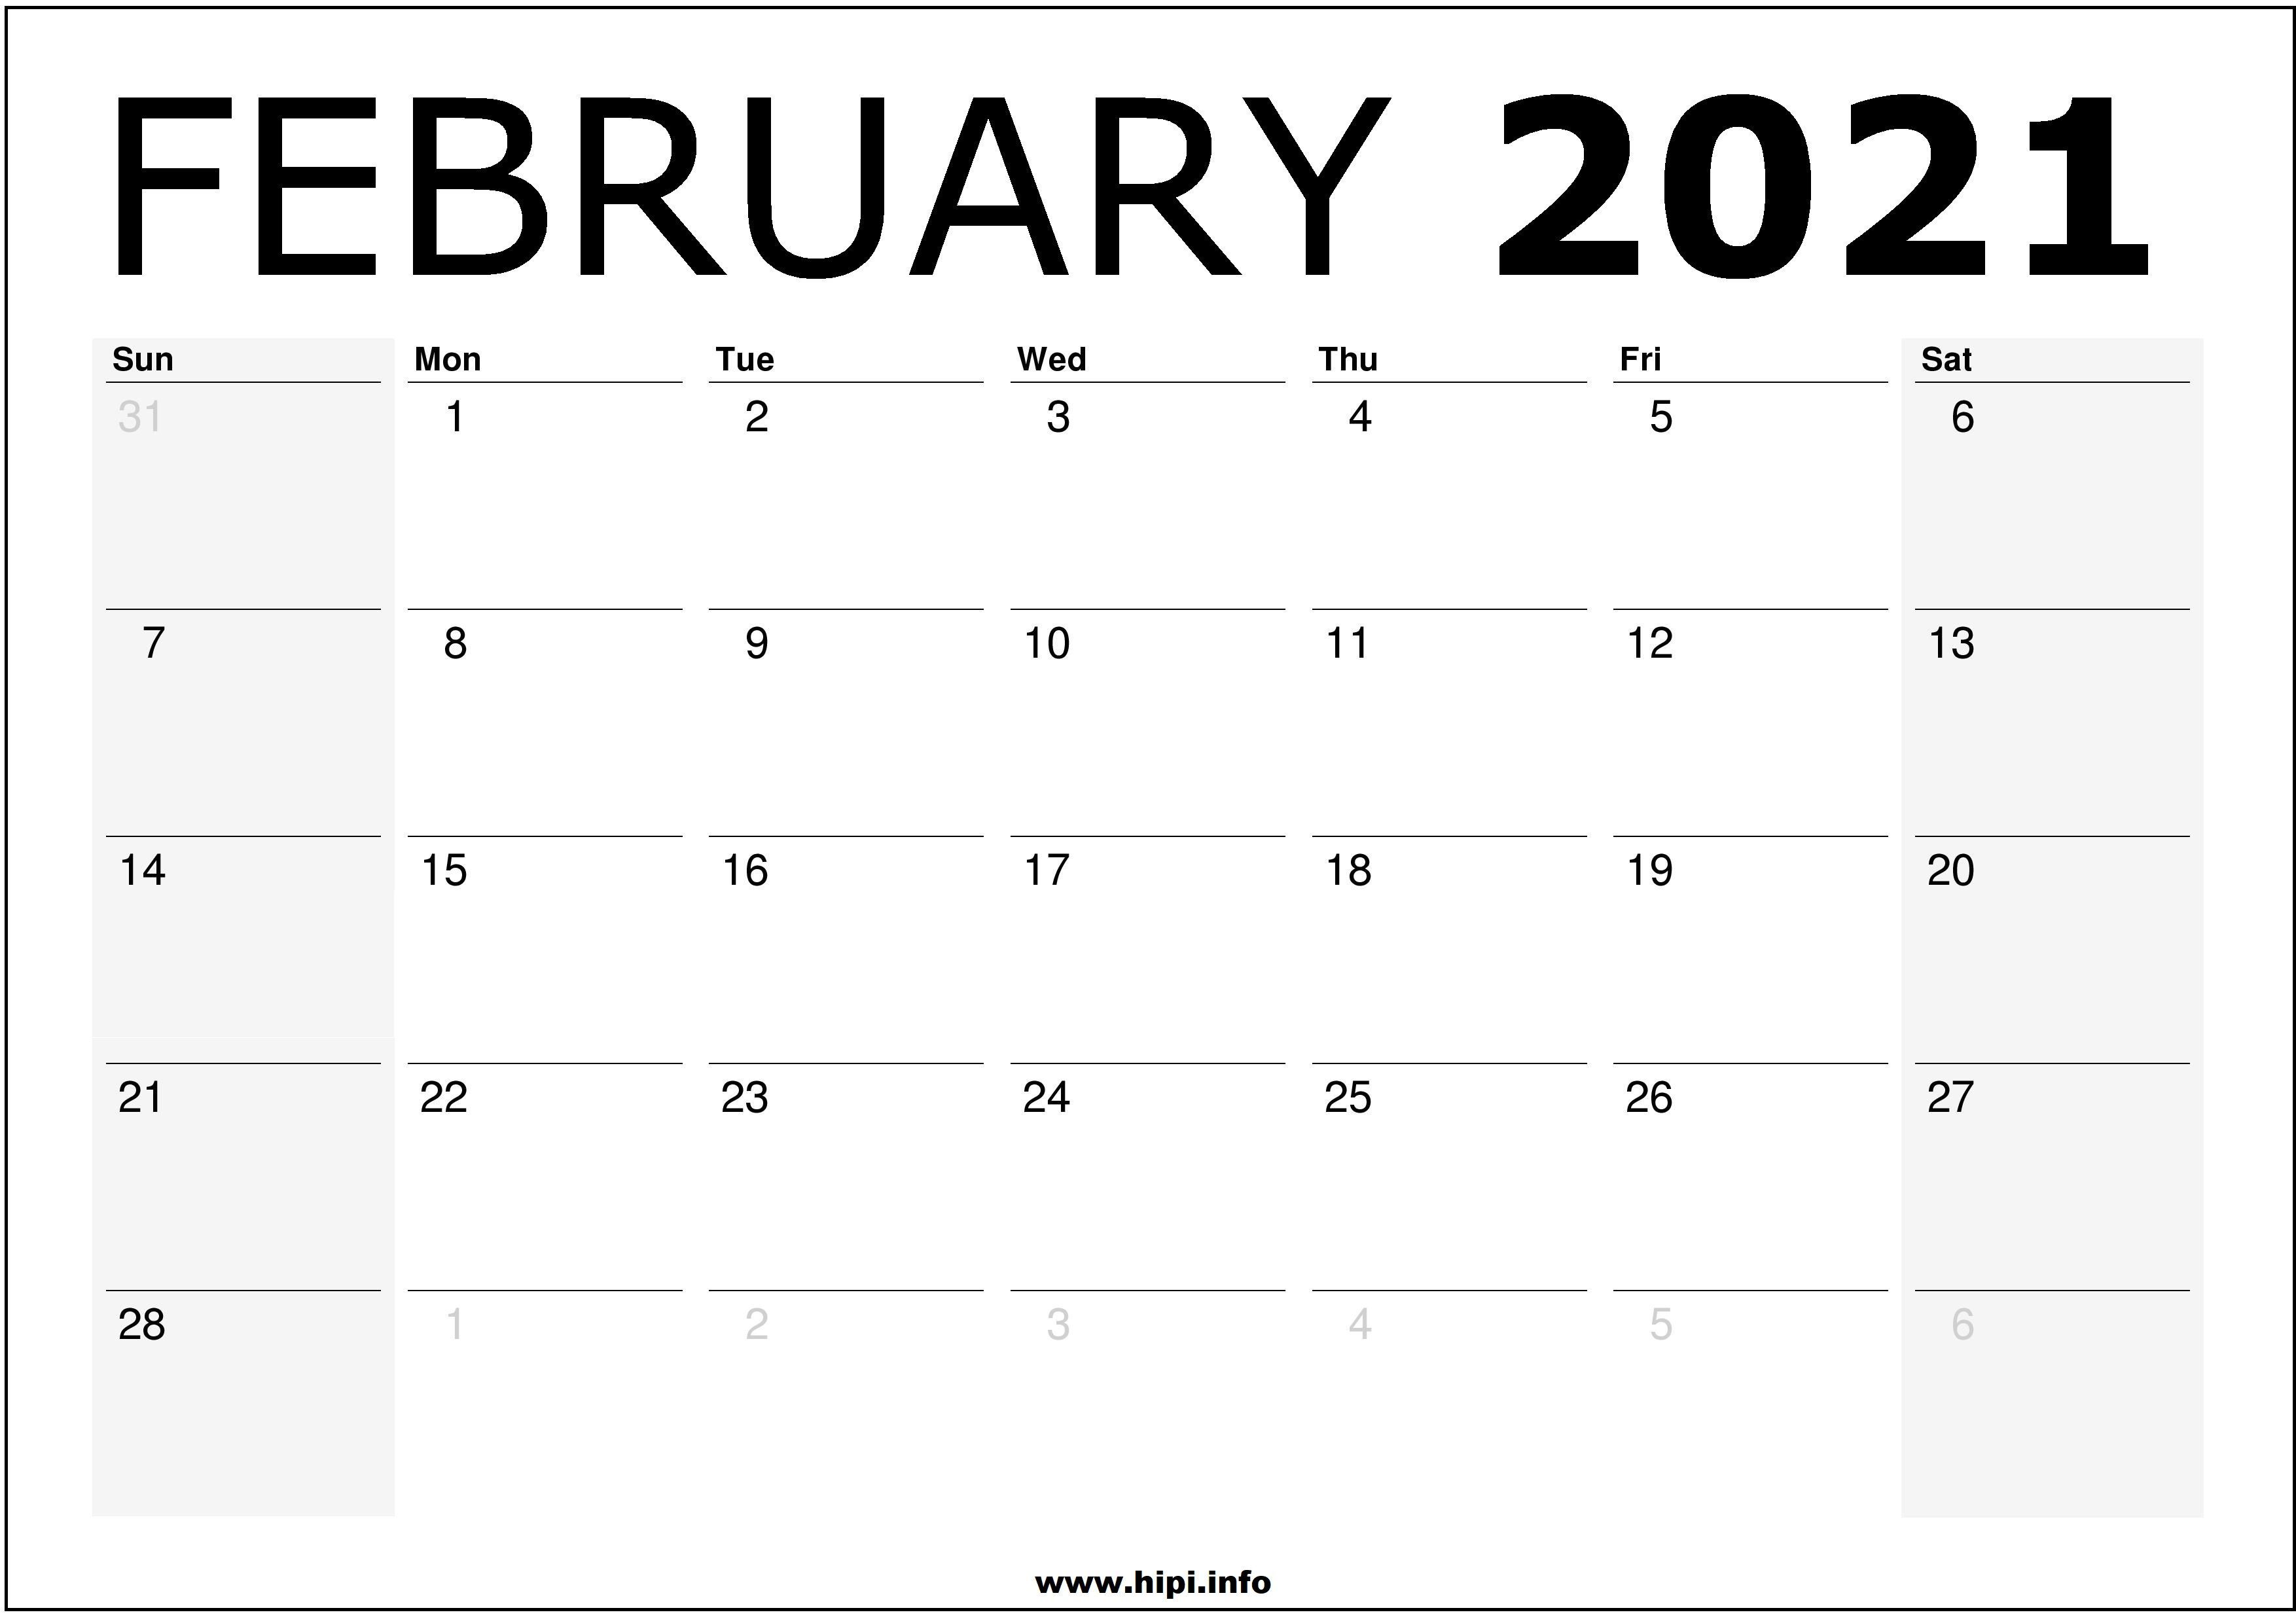 February 2021 Calendar Wallpaper Free February 2021 Calendar Background